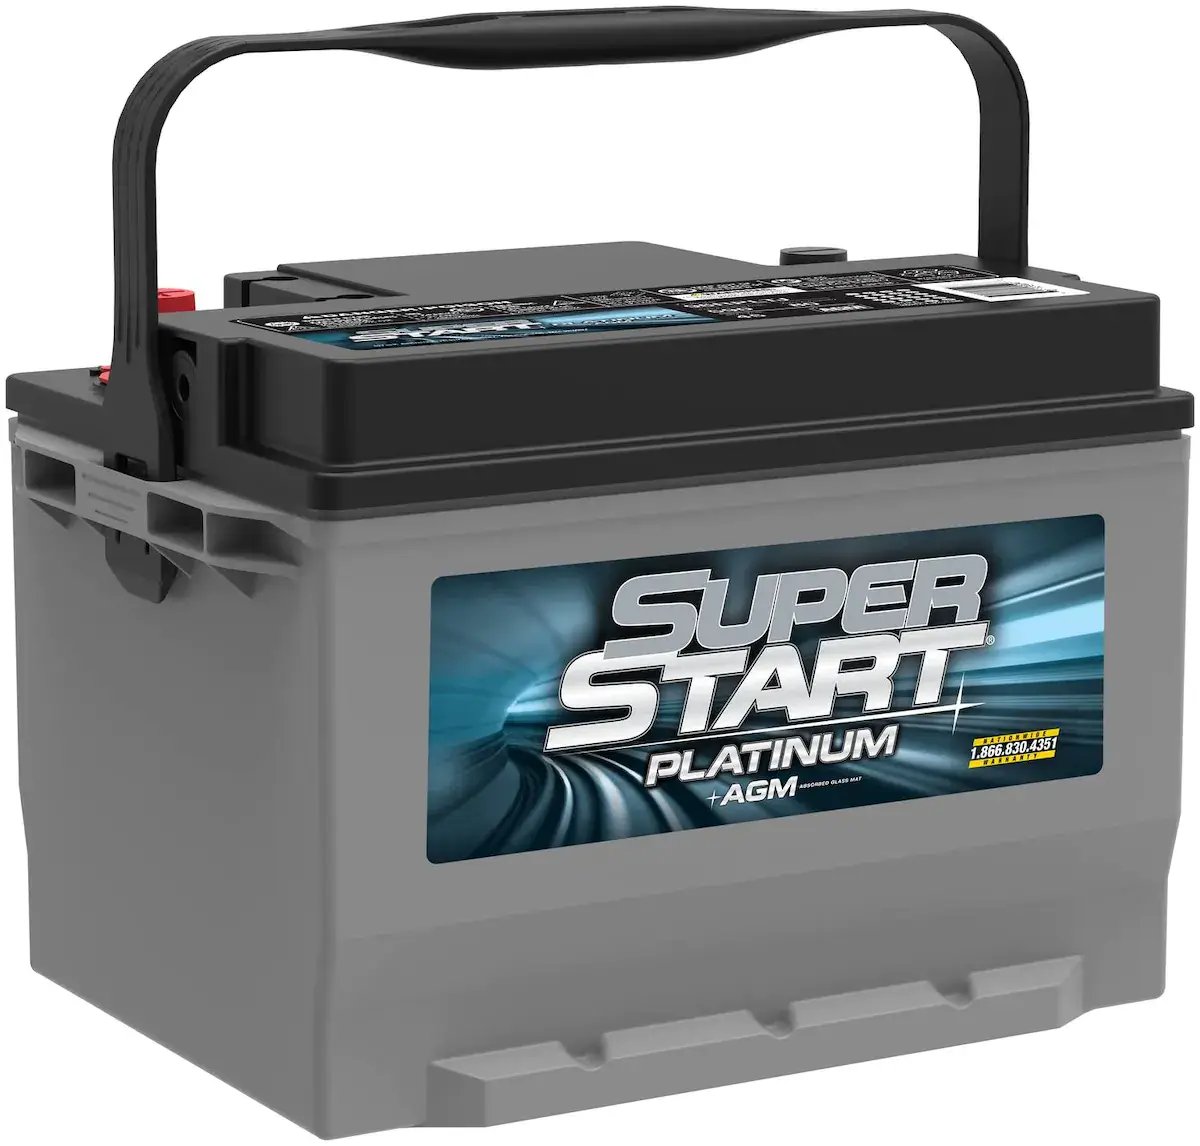 Super start platinum battery